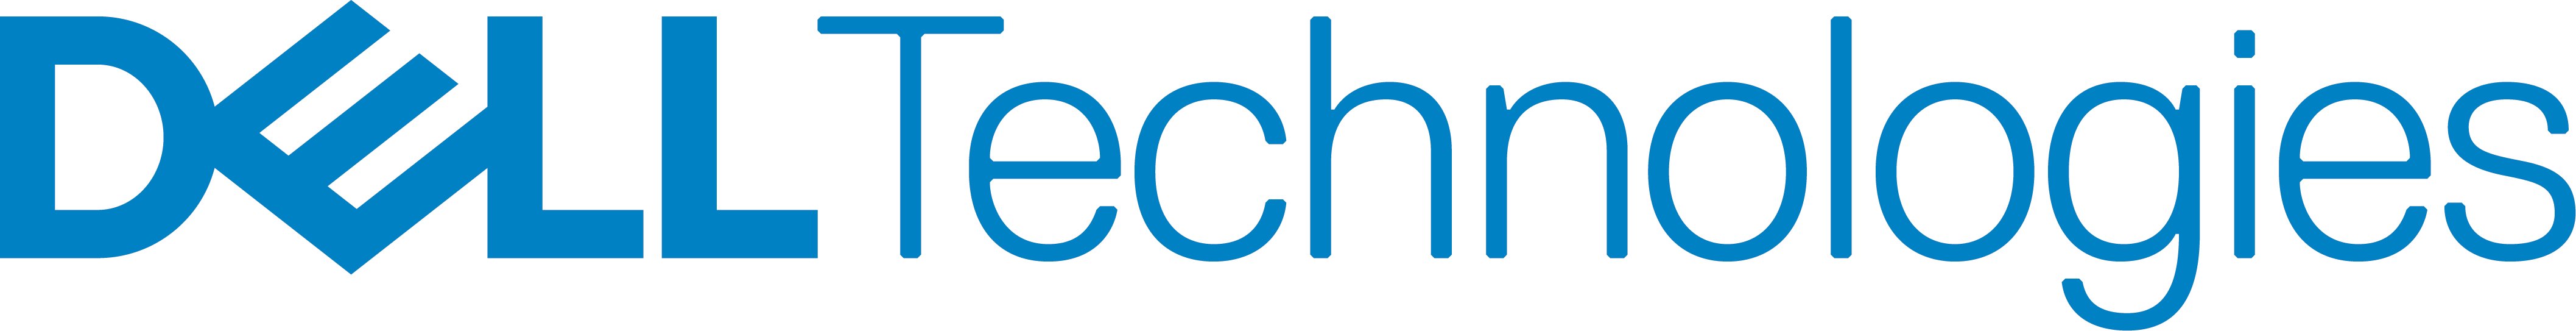 delltechnologies-logo